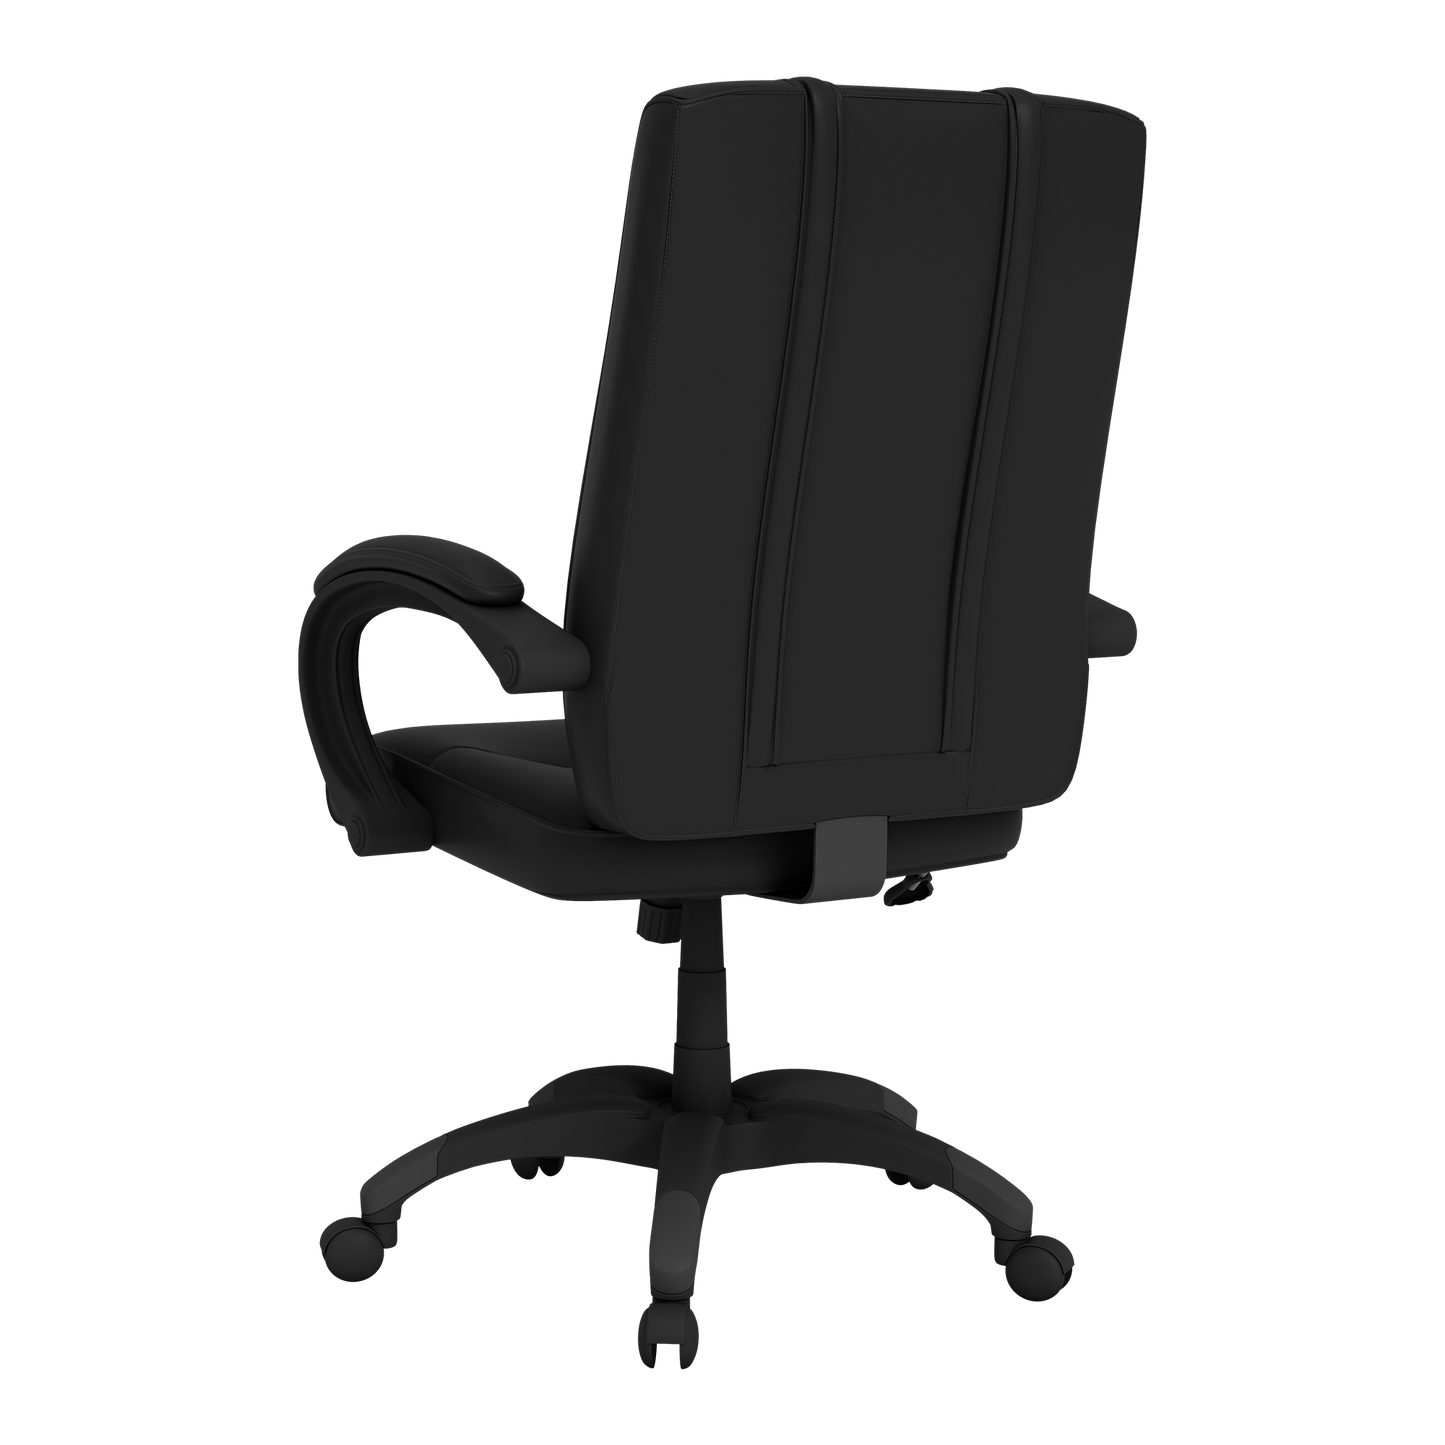 Office Chair 1000 with Toronto Raptors Alternate 2019 Champions Logo